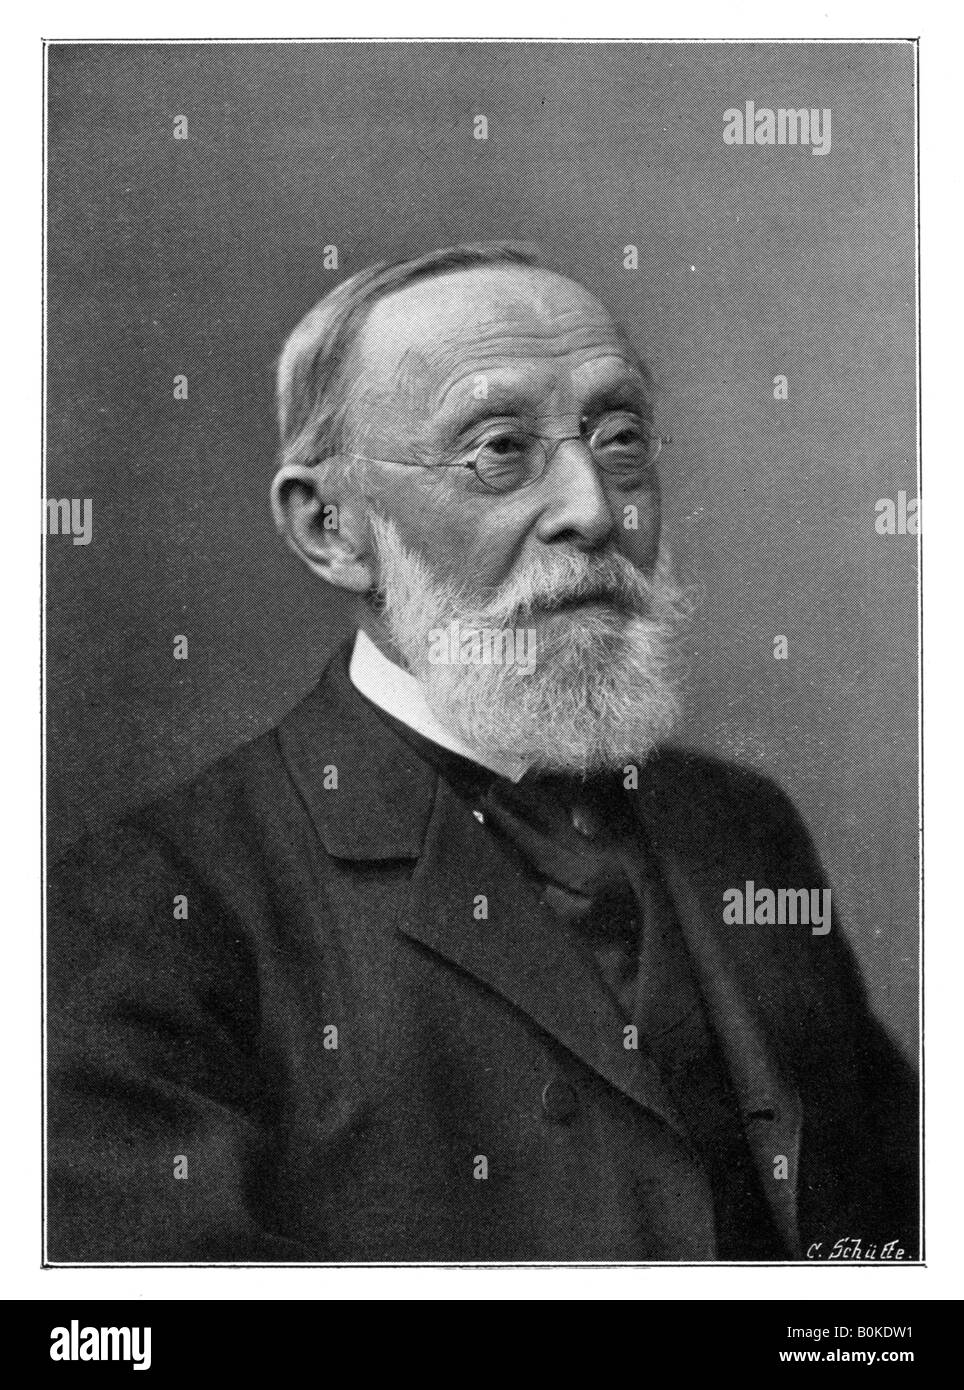 Rudolph Virchow, German pathologist, 1902.Artist: C Schutte Stock Photo